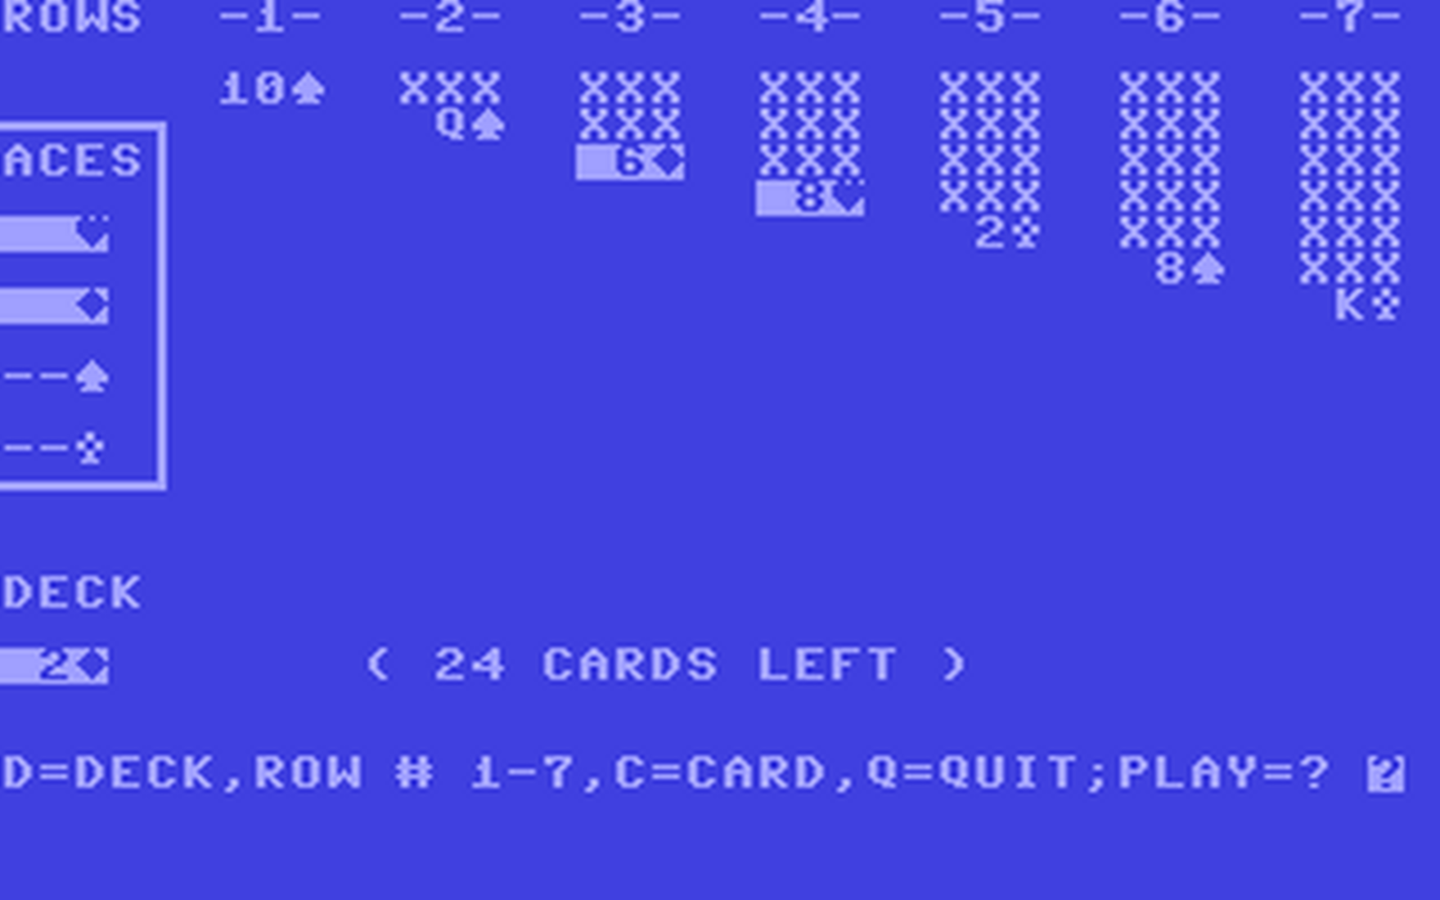 C64 GameBase Solitaire_-_The_Classic_Version Loadstar/Softalk_Production 1985